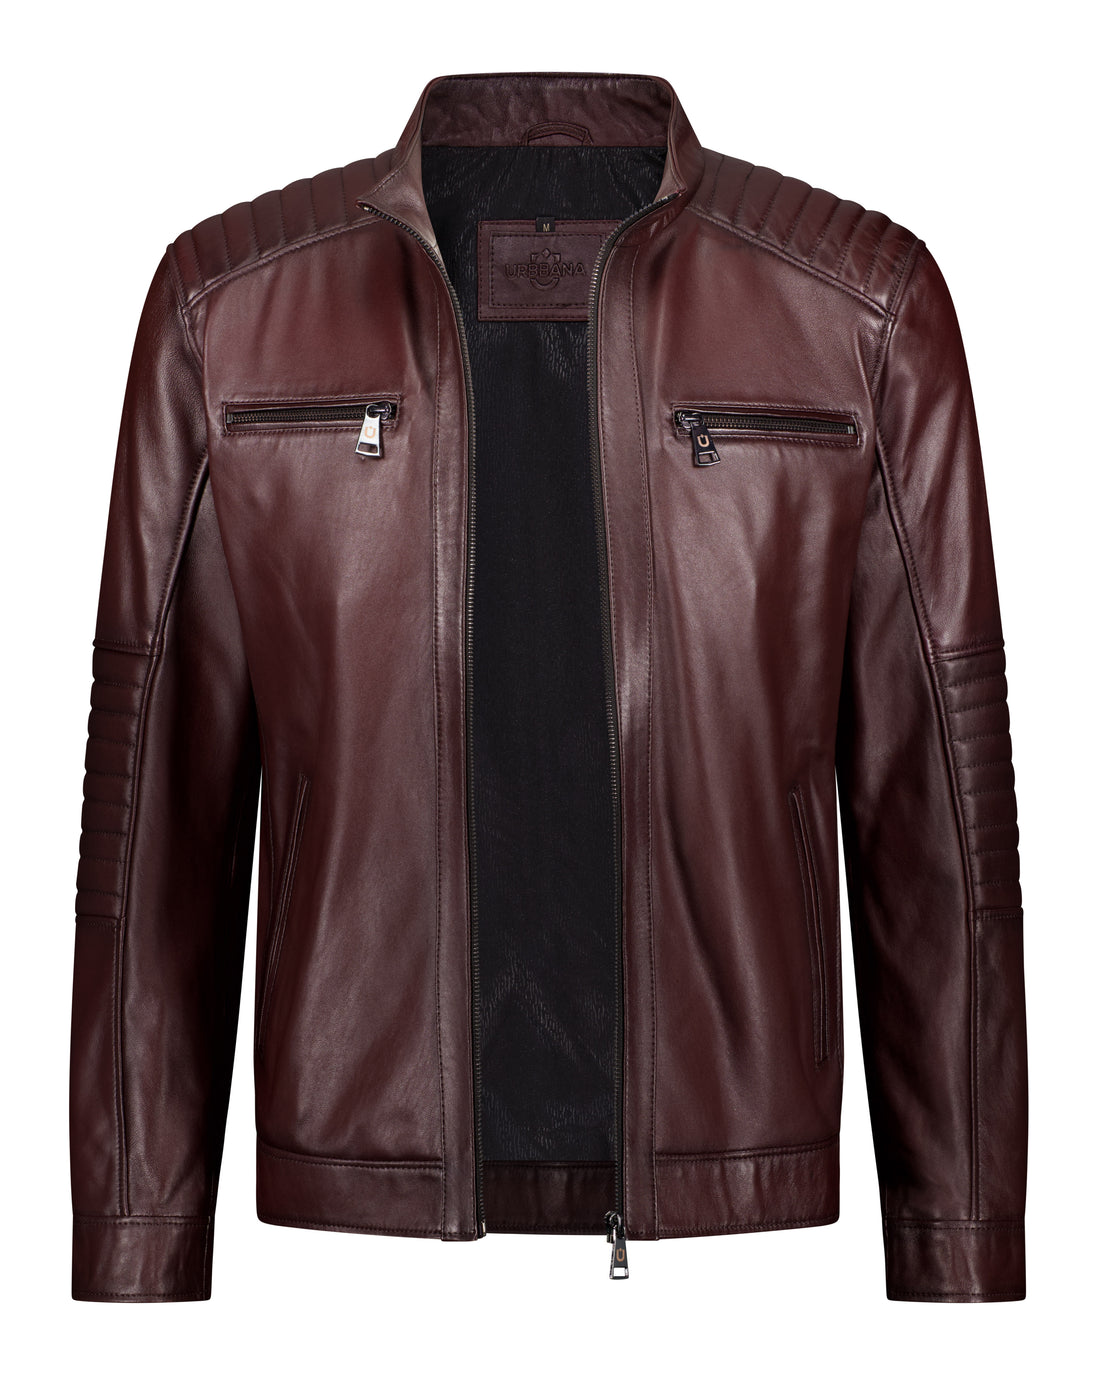 Cafe Racer Leather Jacket - Rich Mahogany